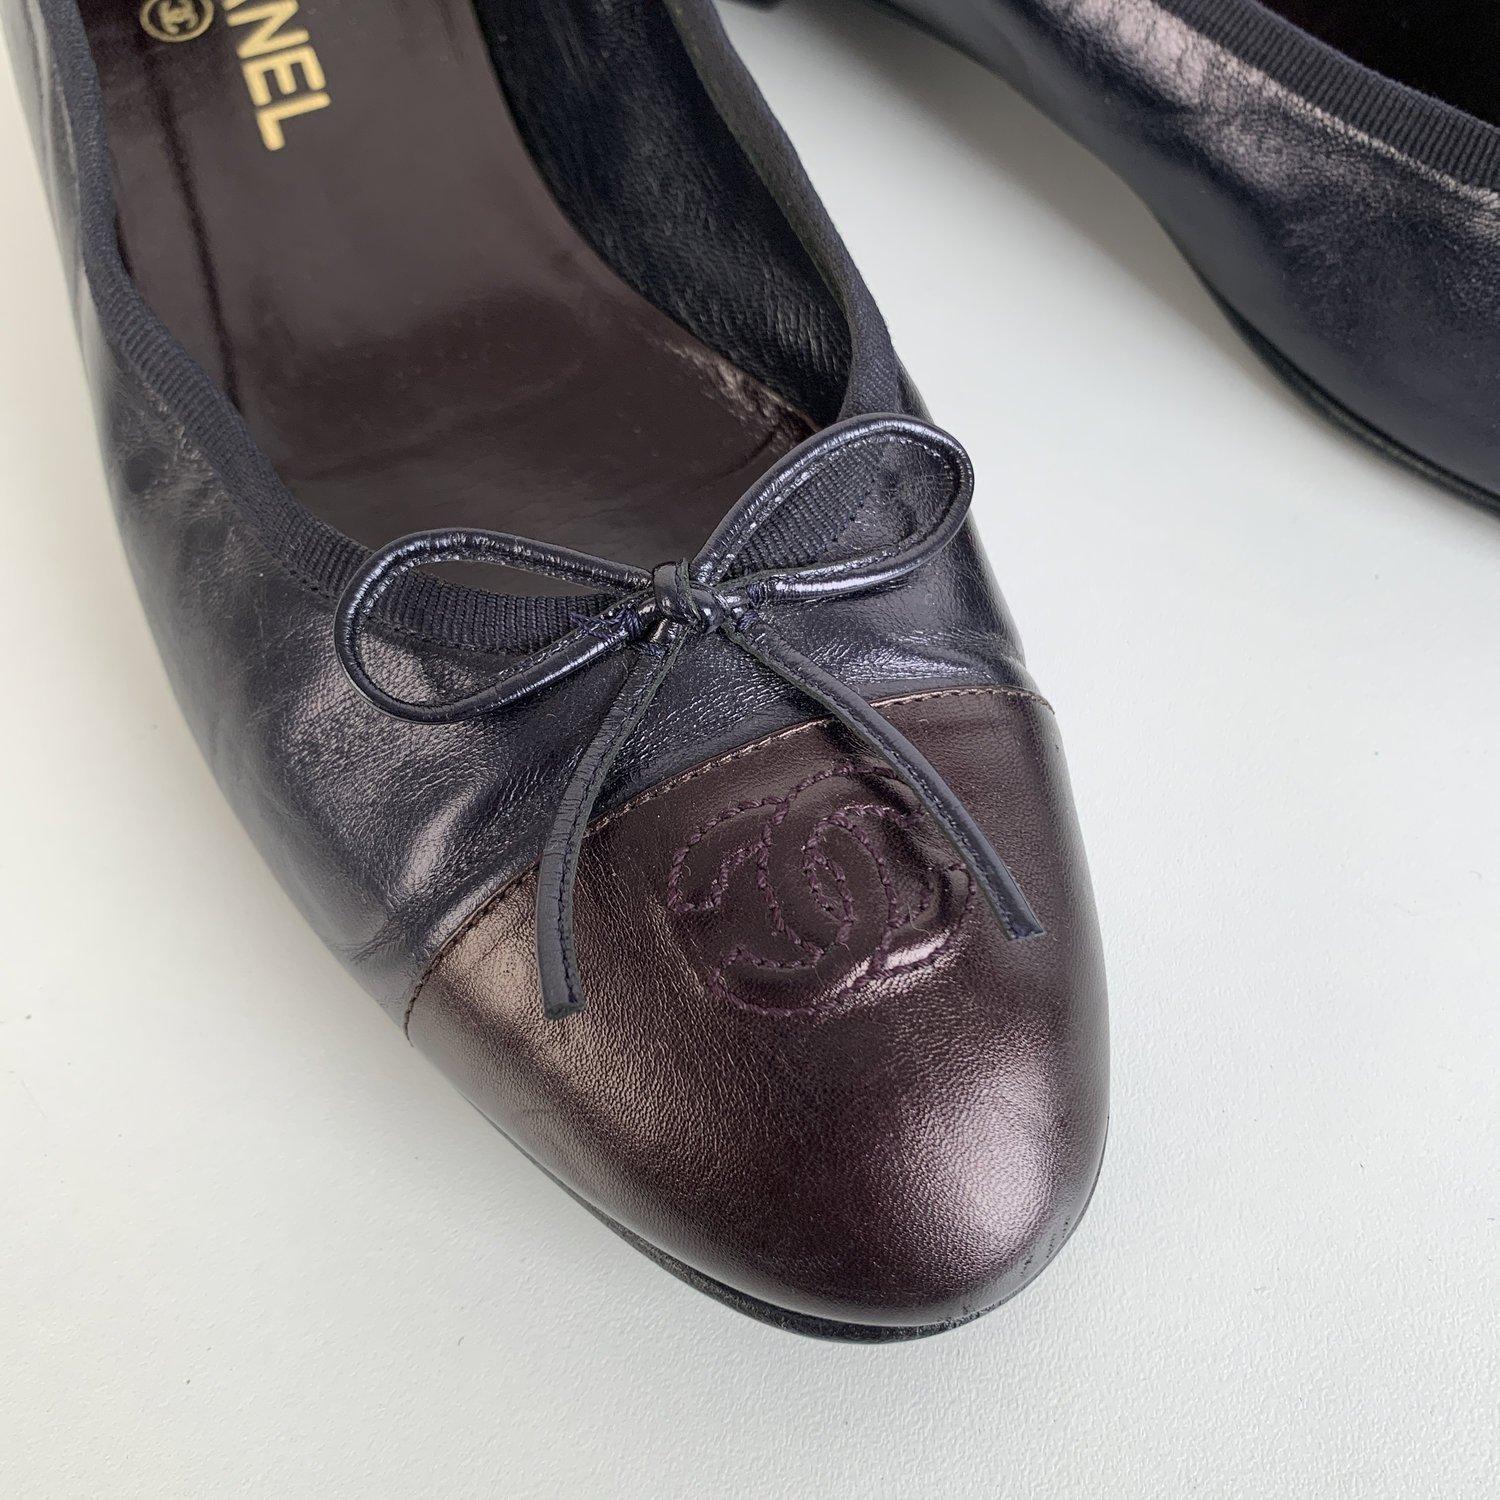 Chanel Black Leather Ballet Flat Ballerina Shoes Size 41 2